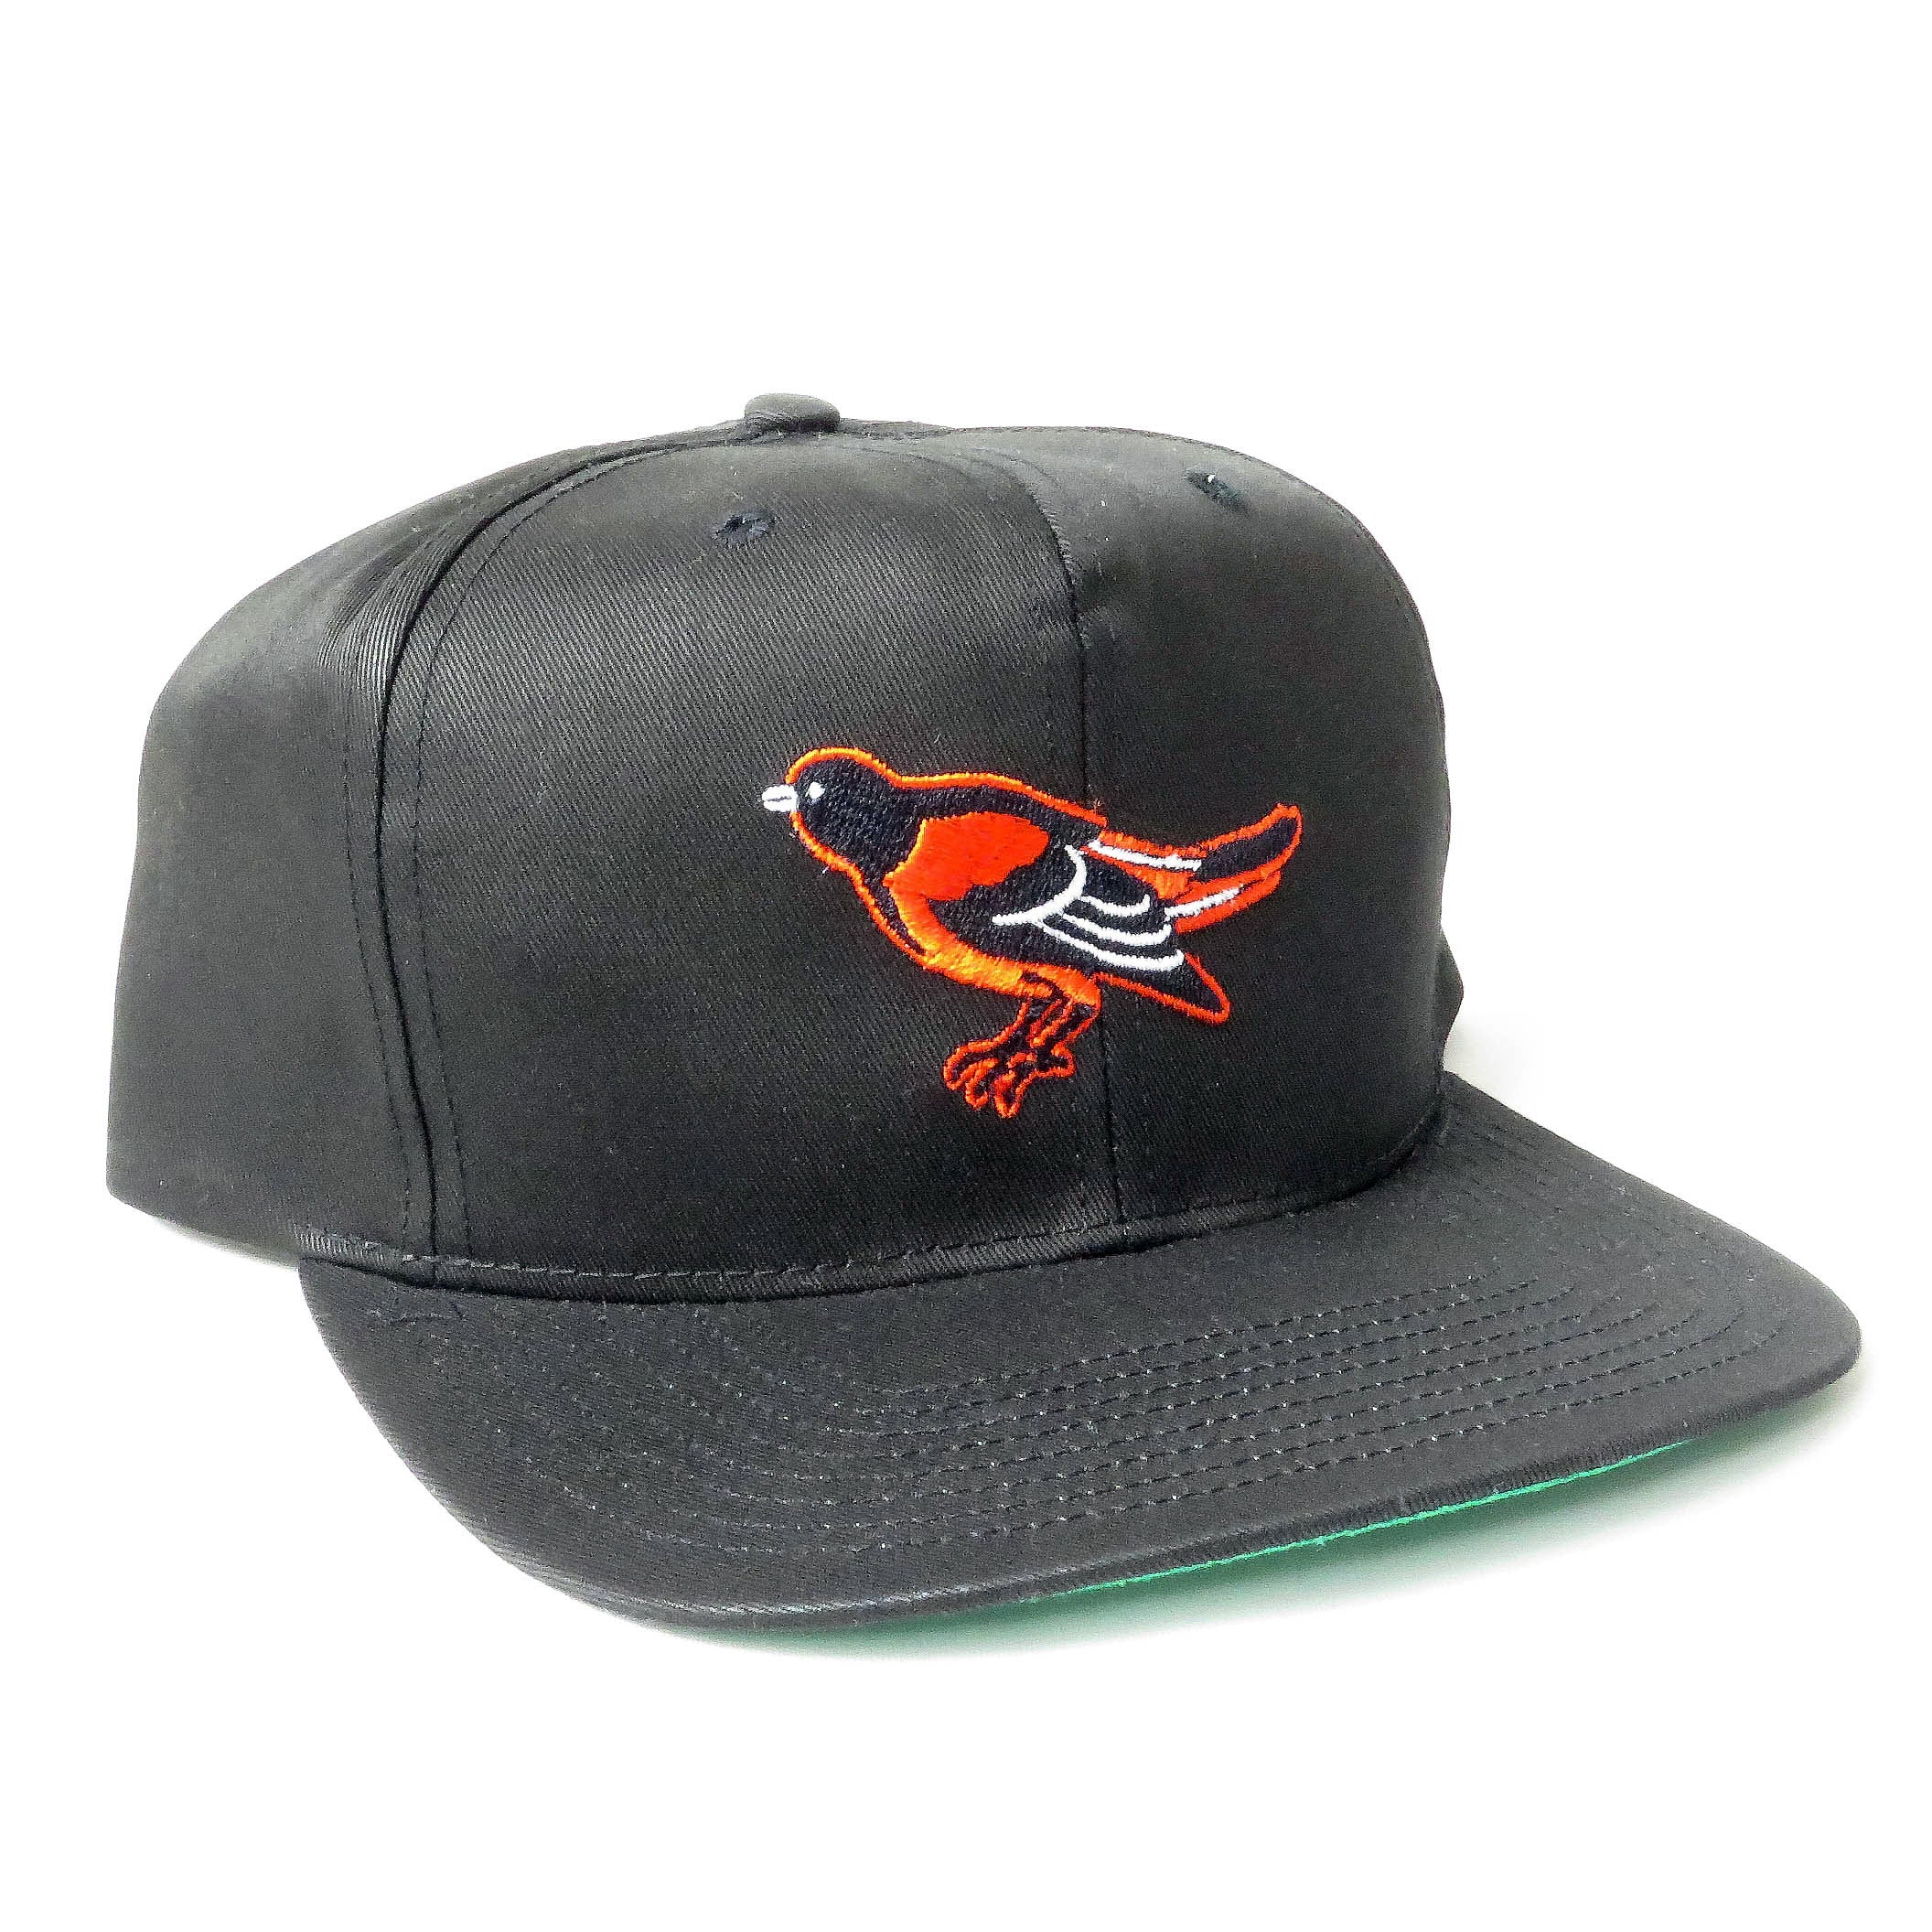 Vintage Baltimore Orioles Snapback Hat